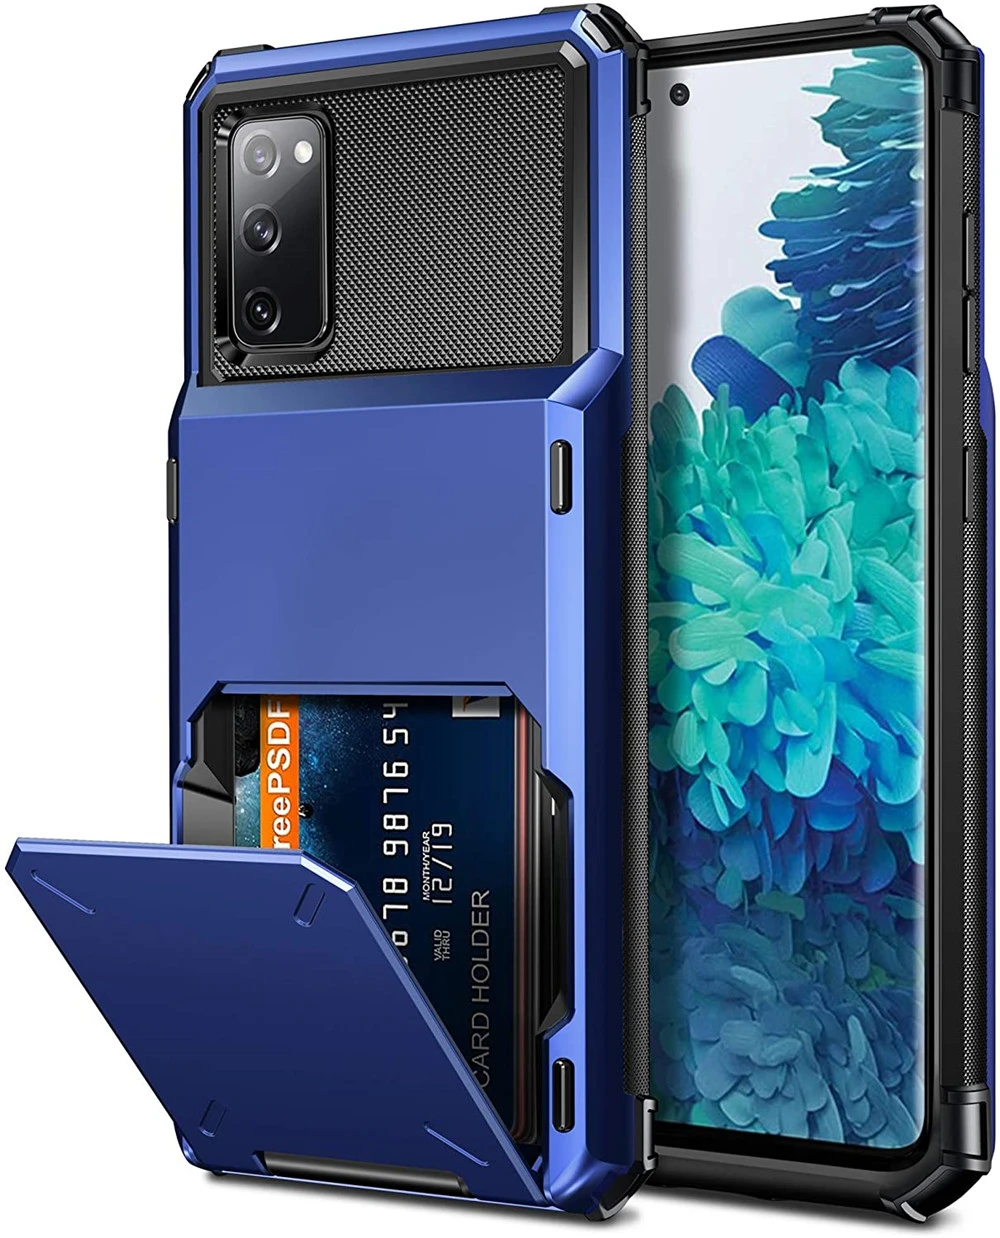 s22 ultra case For Samsung Galaxy S20 FE Case Wallet Credit Card Slot Cover For Samsung Galaxy s20 FE Fan Edition 5G s20FE G780 S21 S22 Ultra galaxy s22 ultra leather case